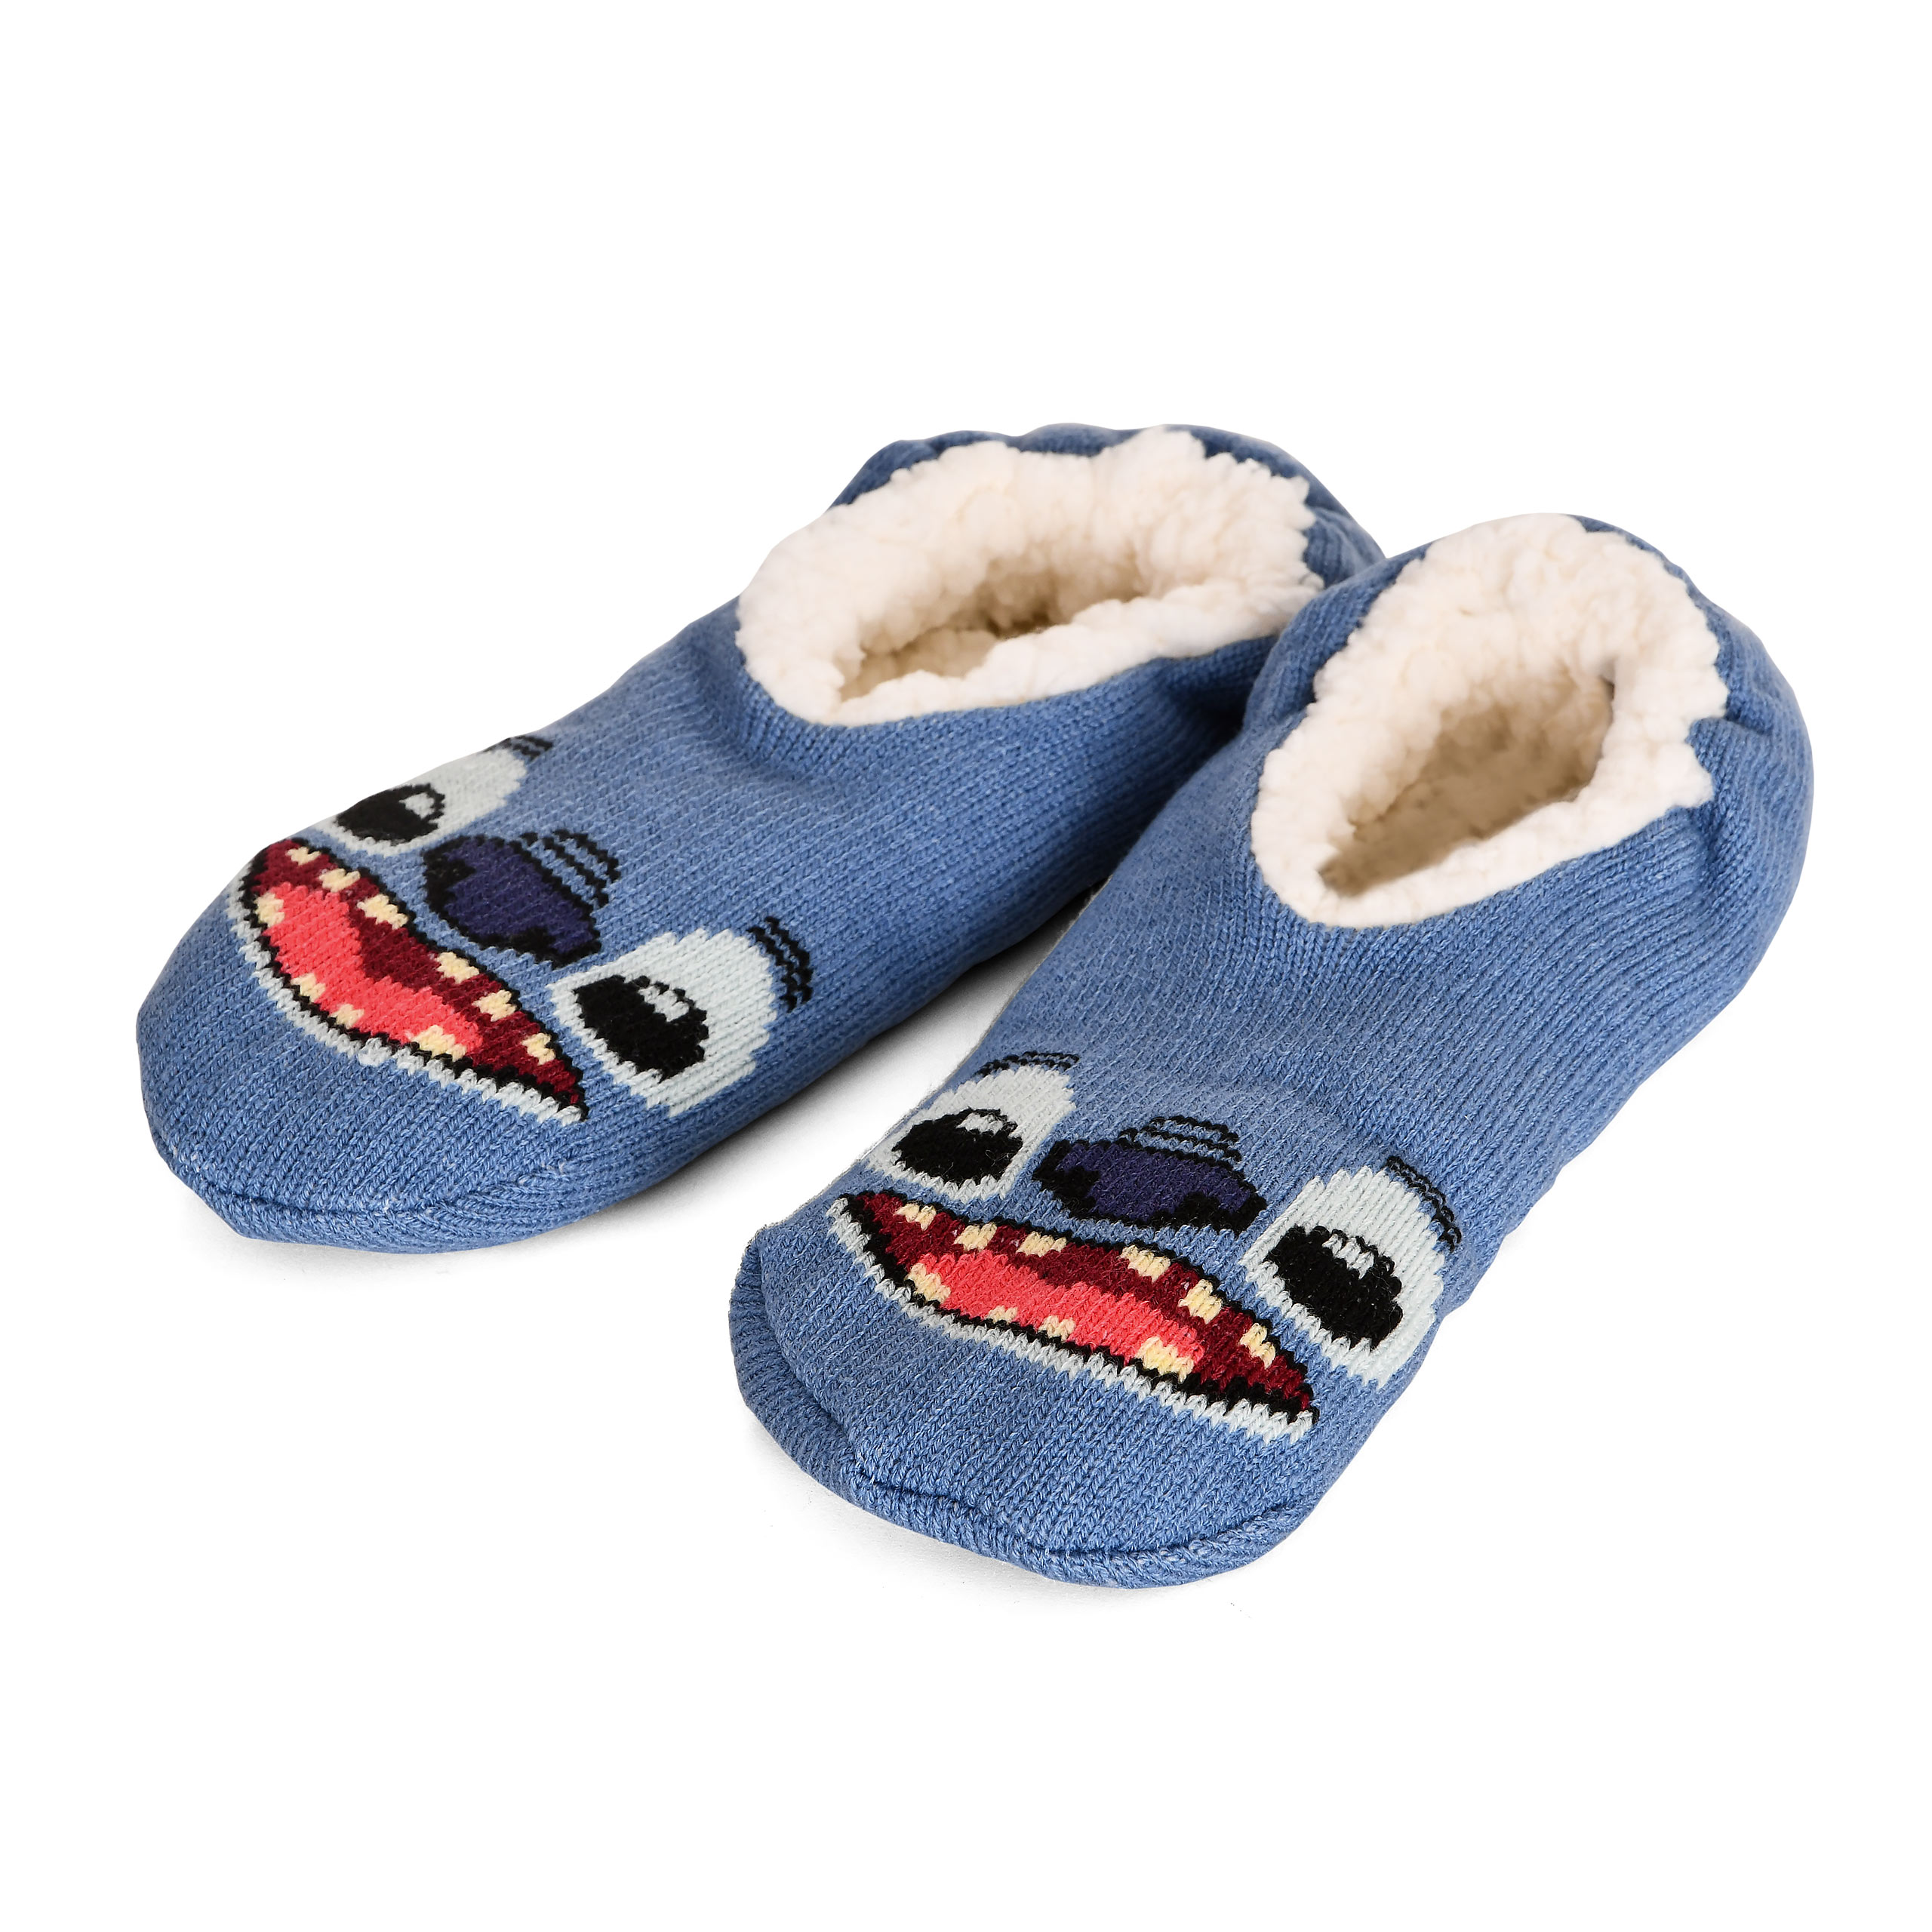 Lilo & Stitch - Stitch Plush Slippers blue